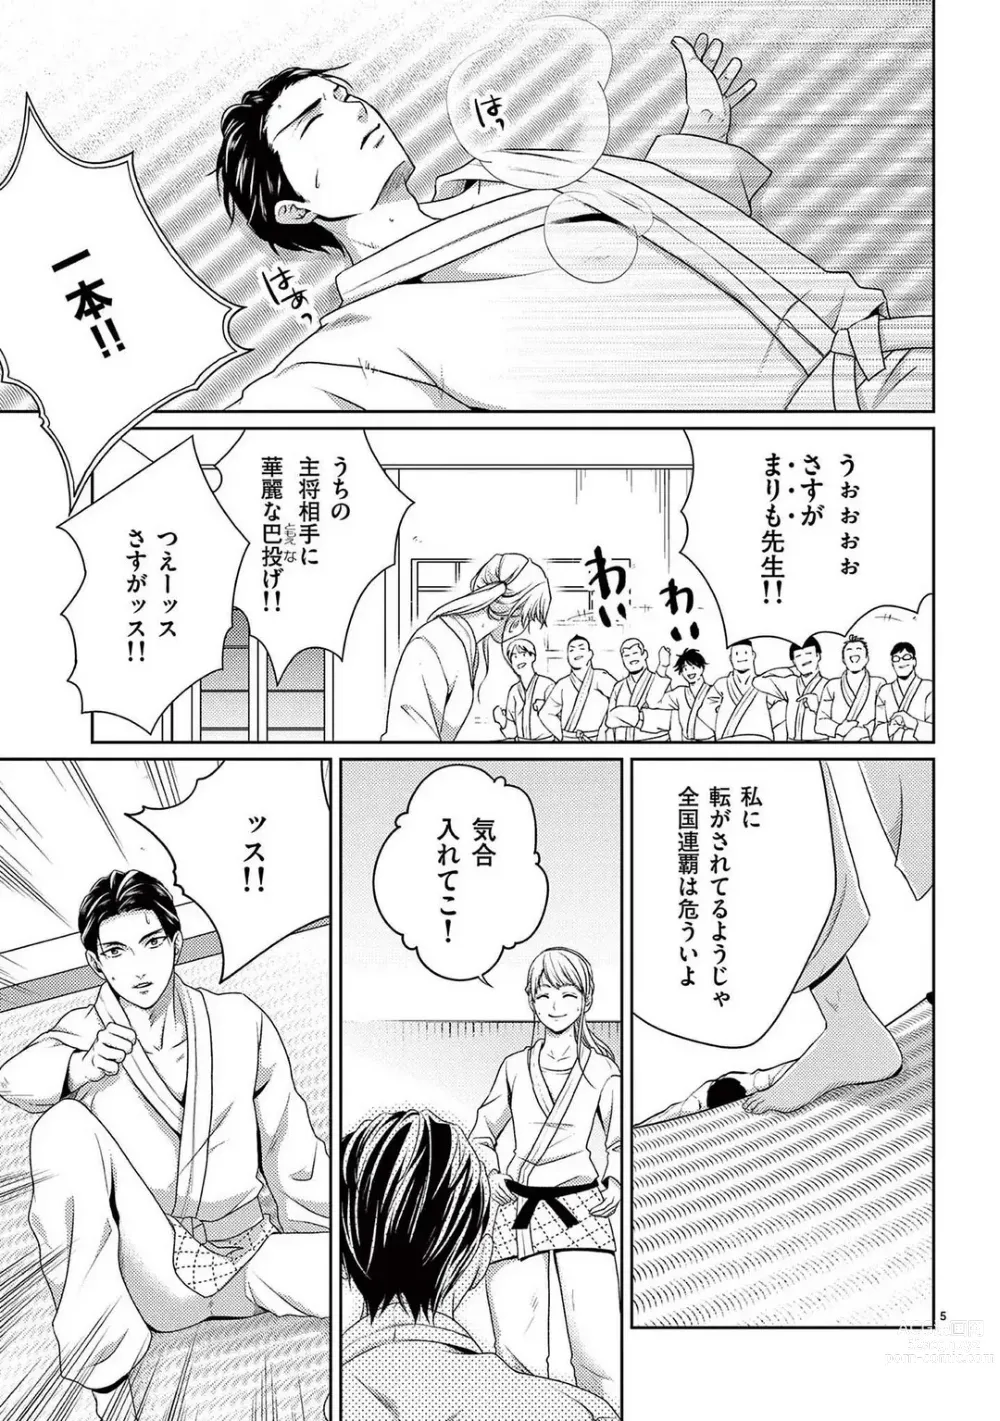 Page 6 of manga Sono Ase, Sekkusu Pafuyūmu. 〜 Sutte, Kisushite, Musabotte~Chp.1-7